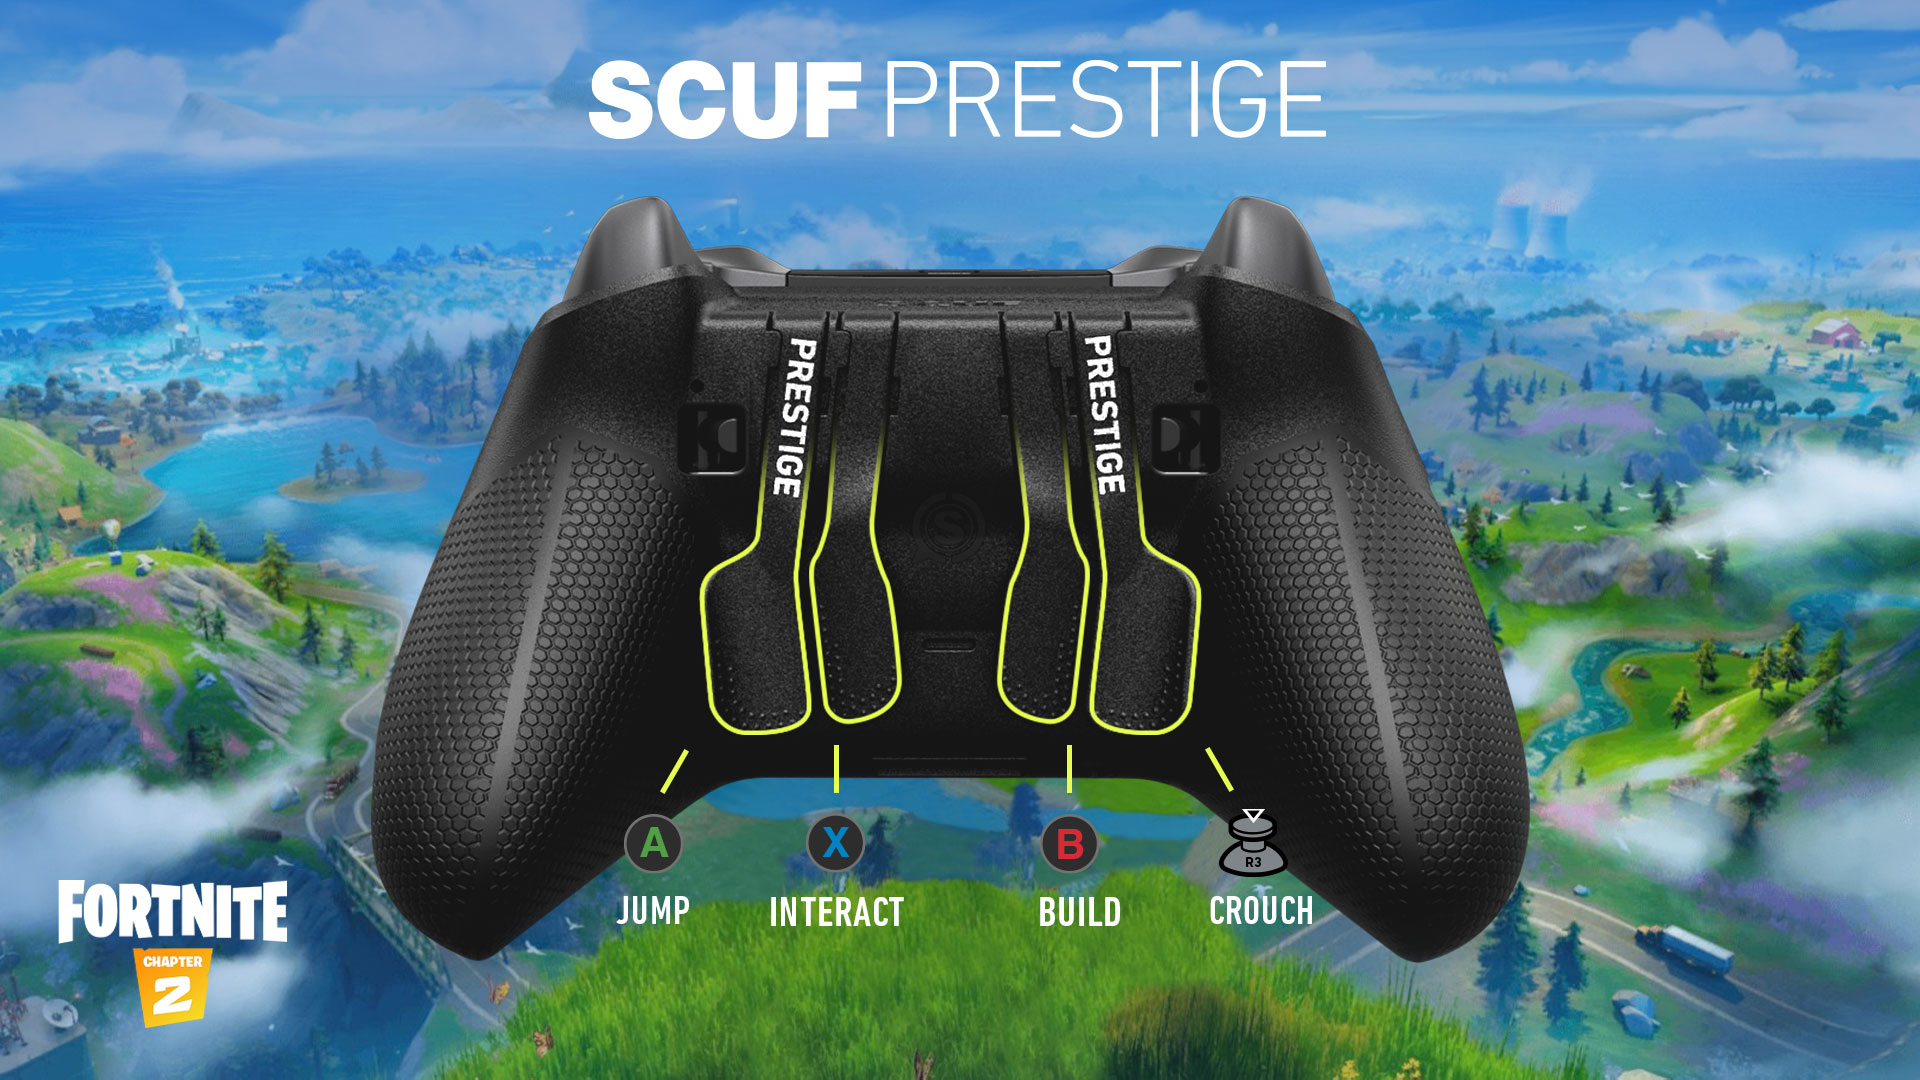 „Xbox One“-Controller-Konfiguration für SCUF Prestige bei Fortnite